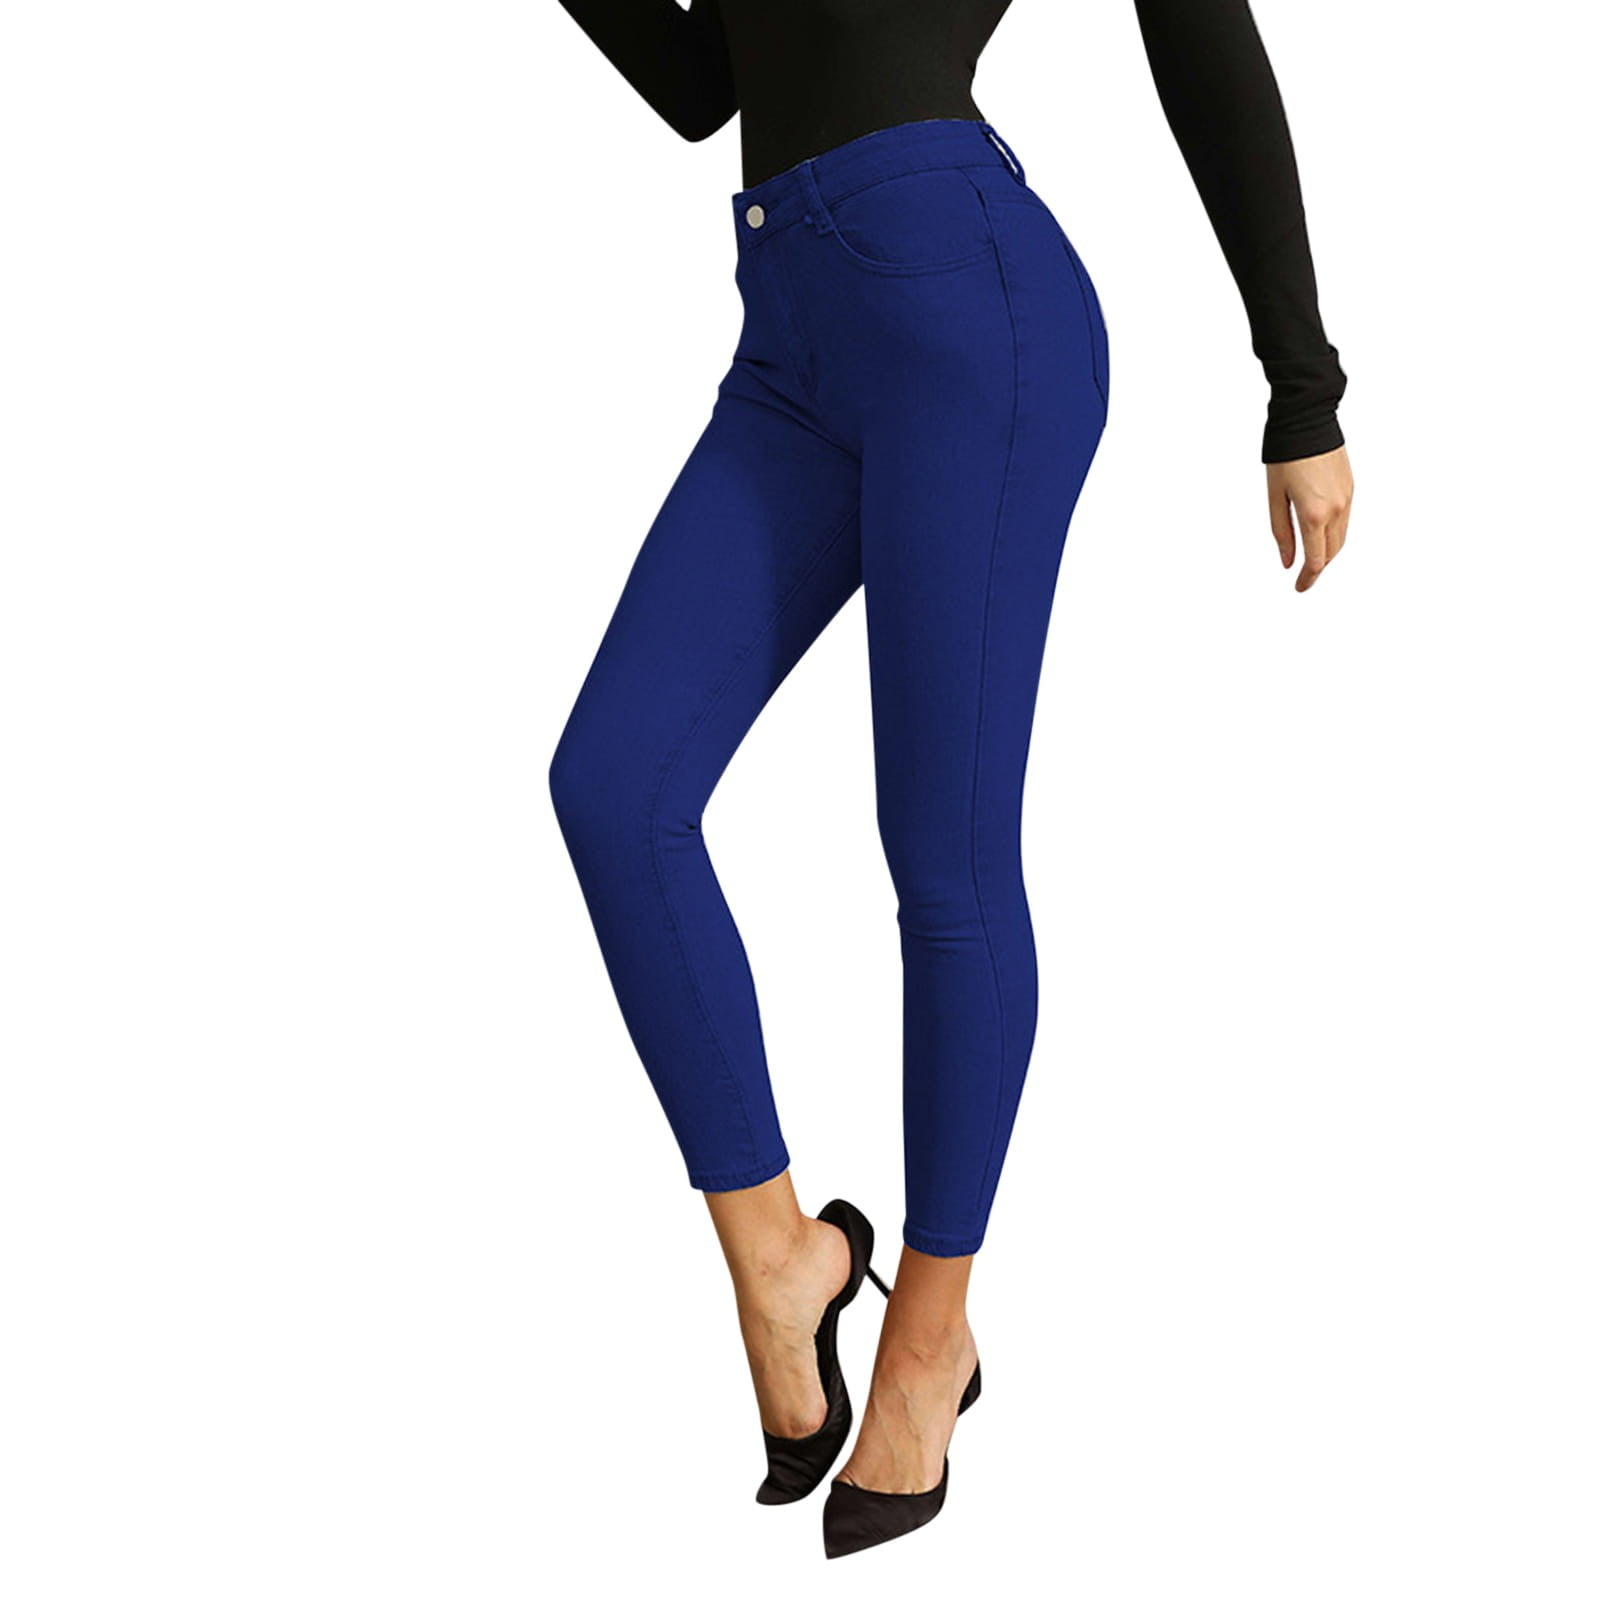 Denim Pants For Women Elastic Waist Slim High Waist Solid Color Medium Wash Skinny Jeans